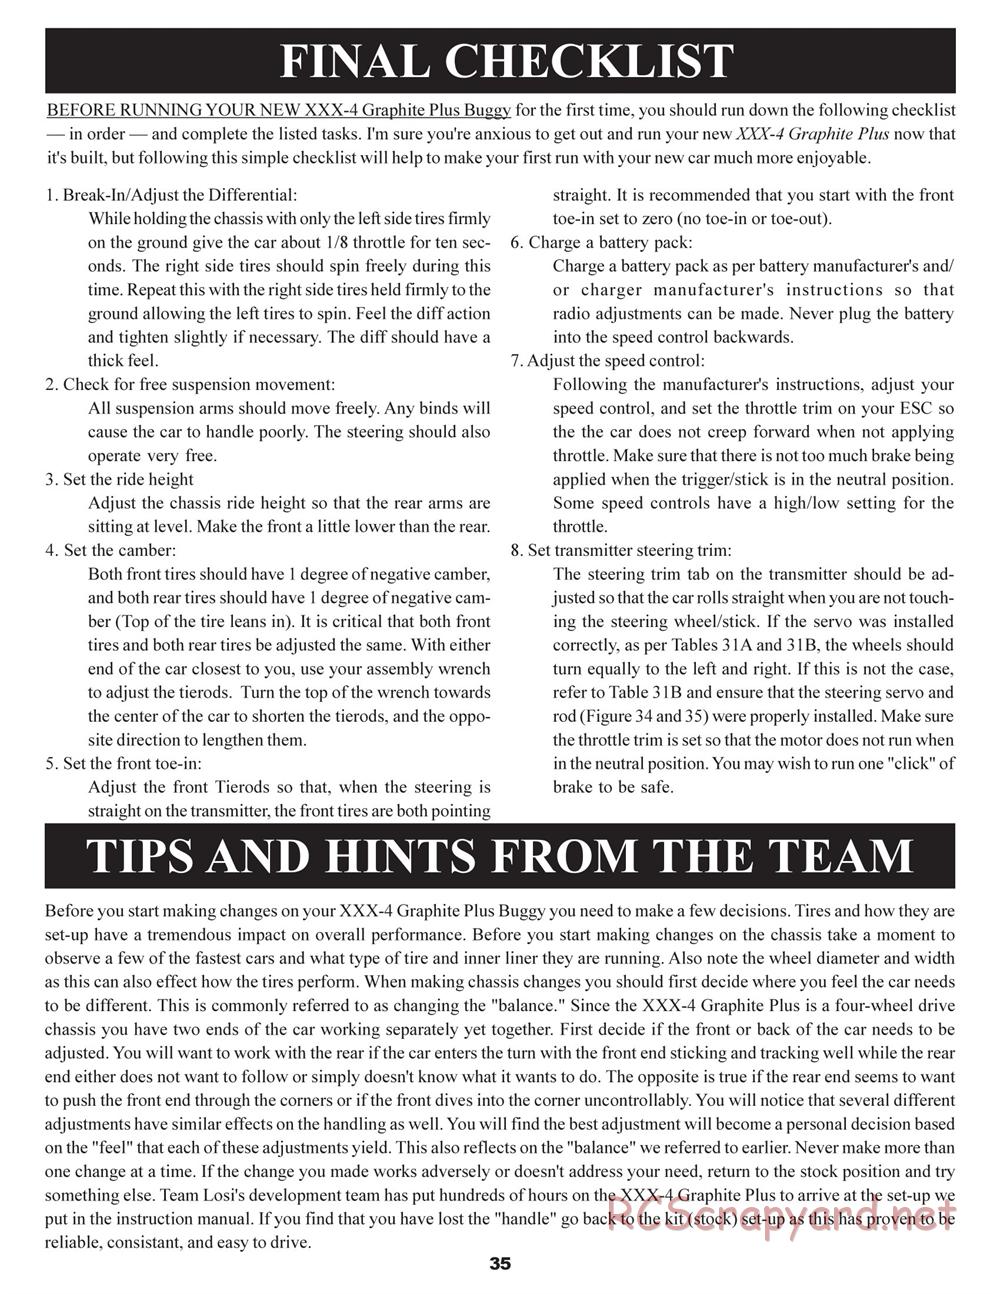 Team Losi - XXX4 G+ (Graphite Plus) - Manual - Page 38